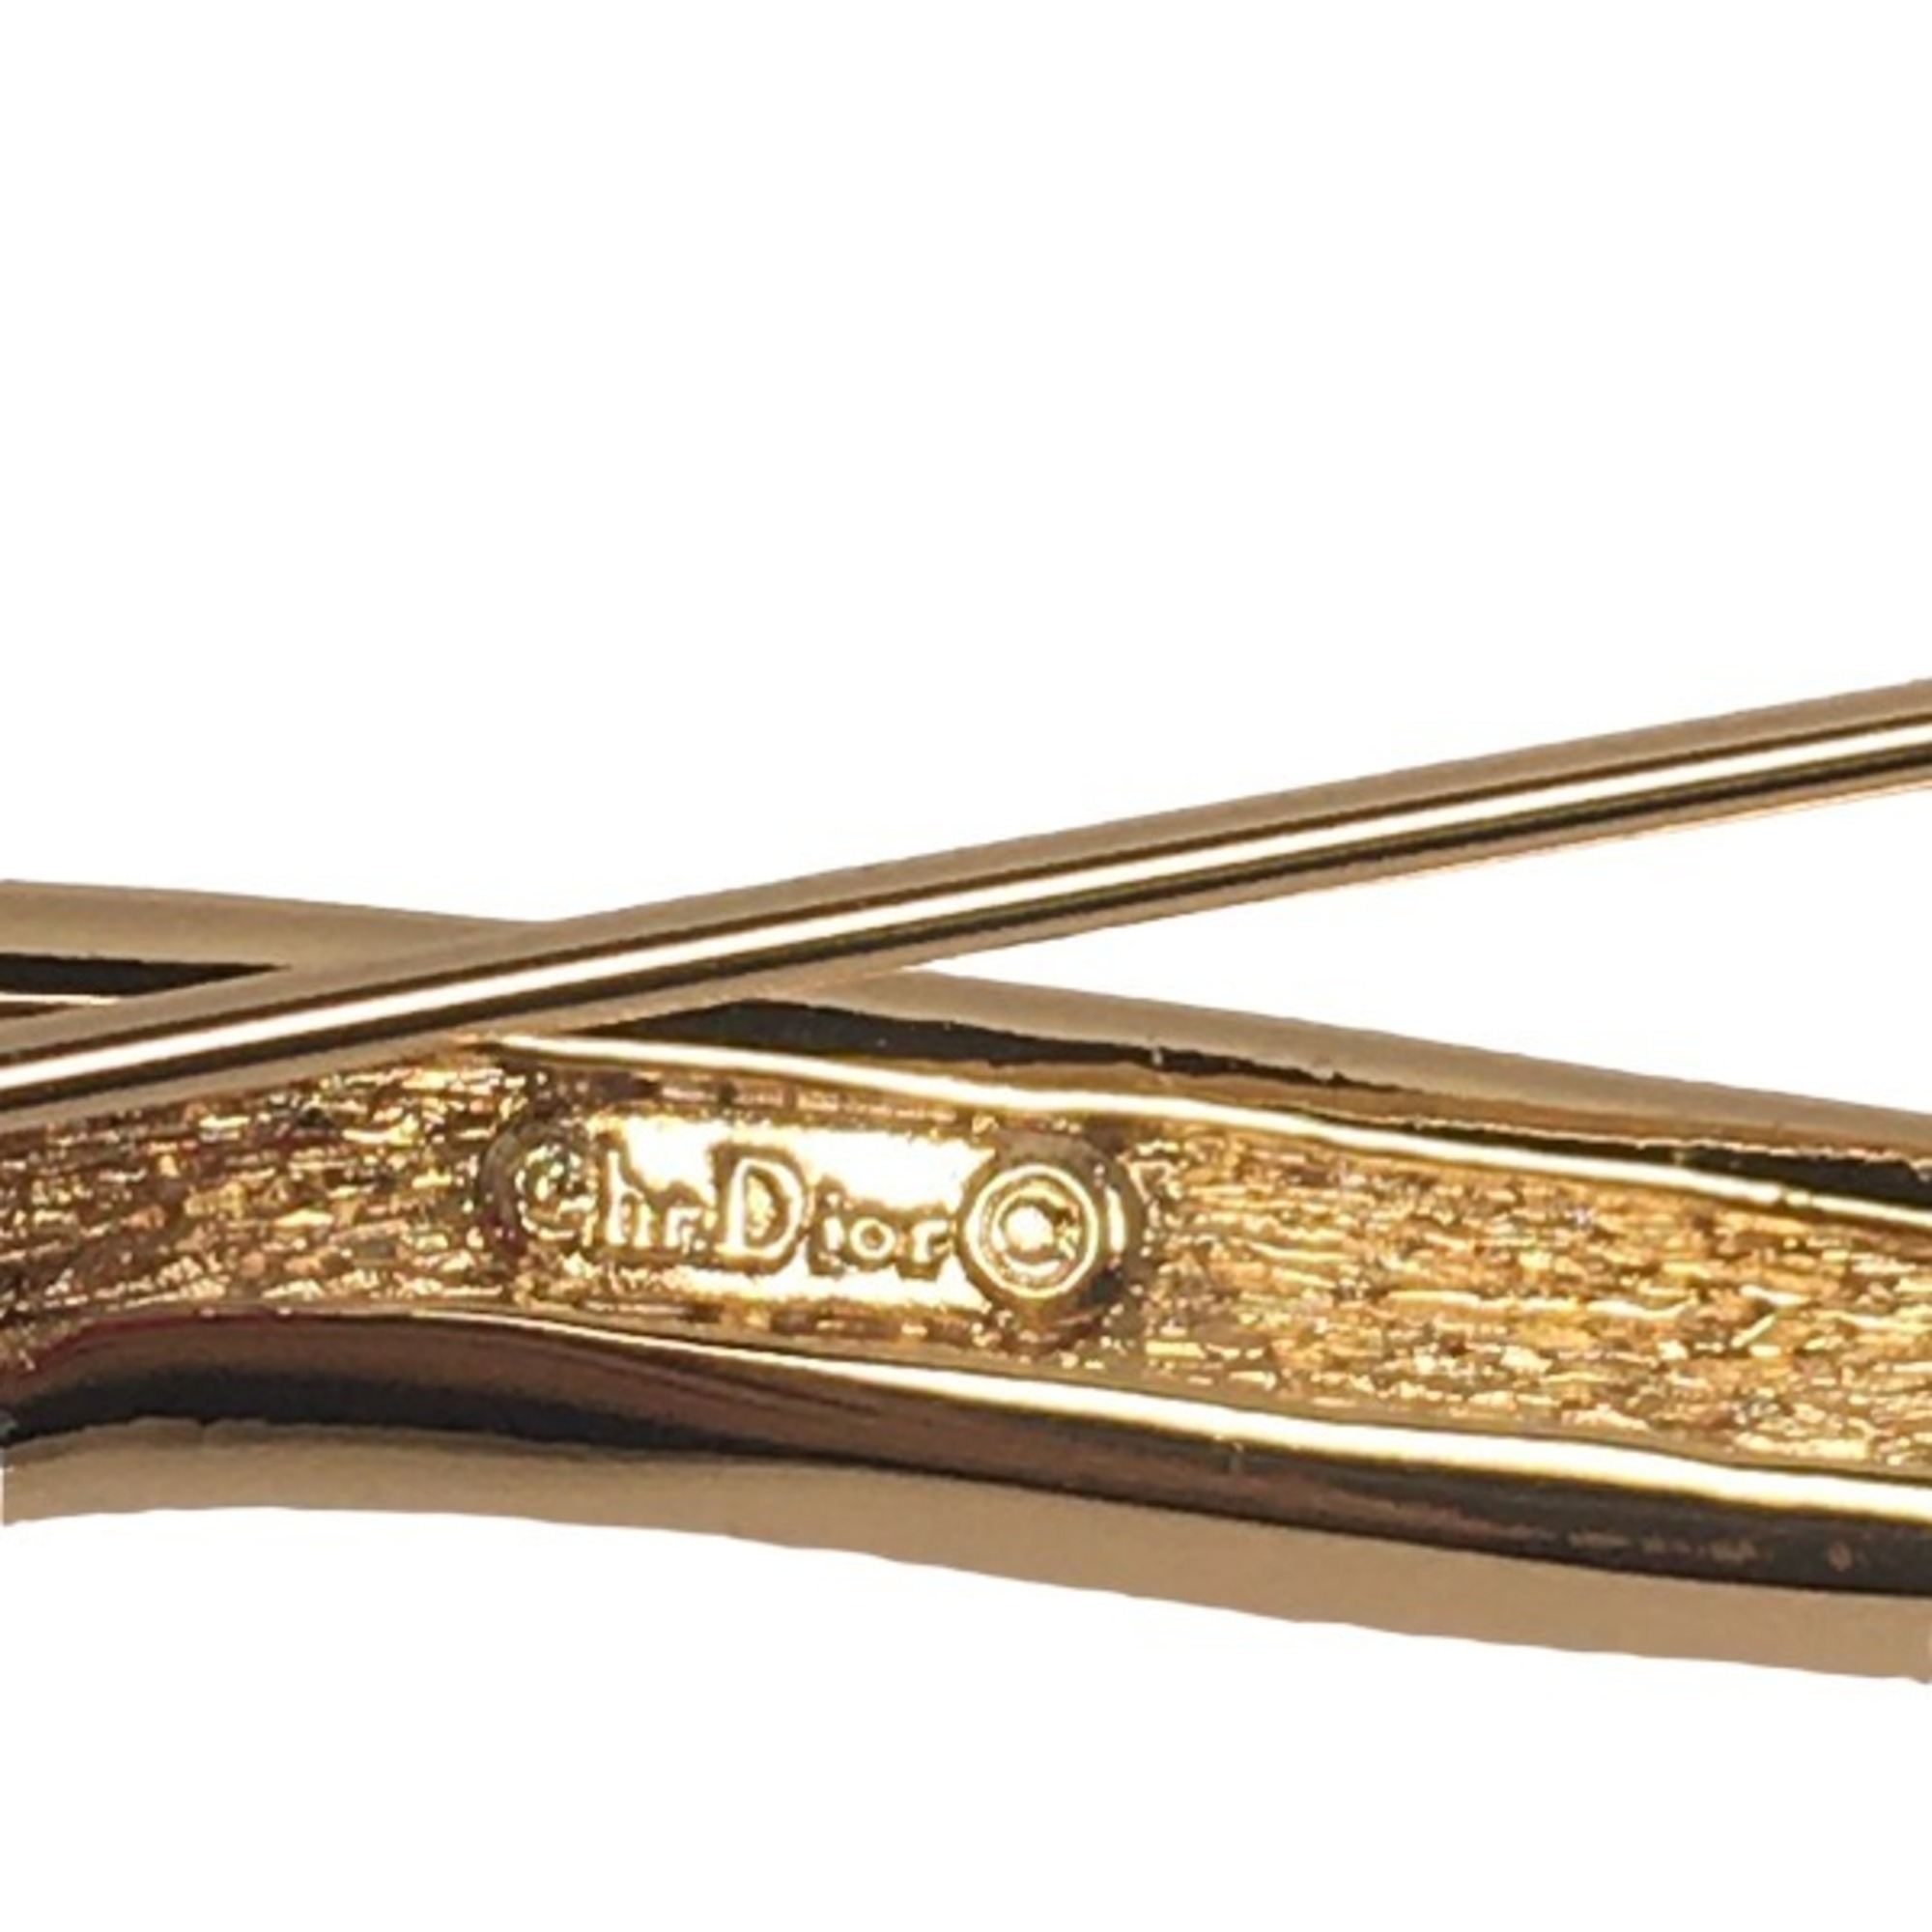 Christian Dior Dior Rotating Pin Type Leaf Motif Pave Bijou Christian Gold Brooch